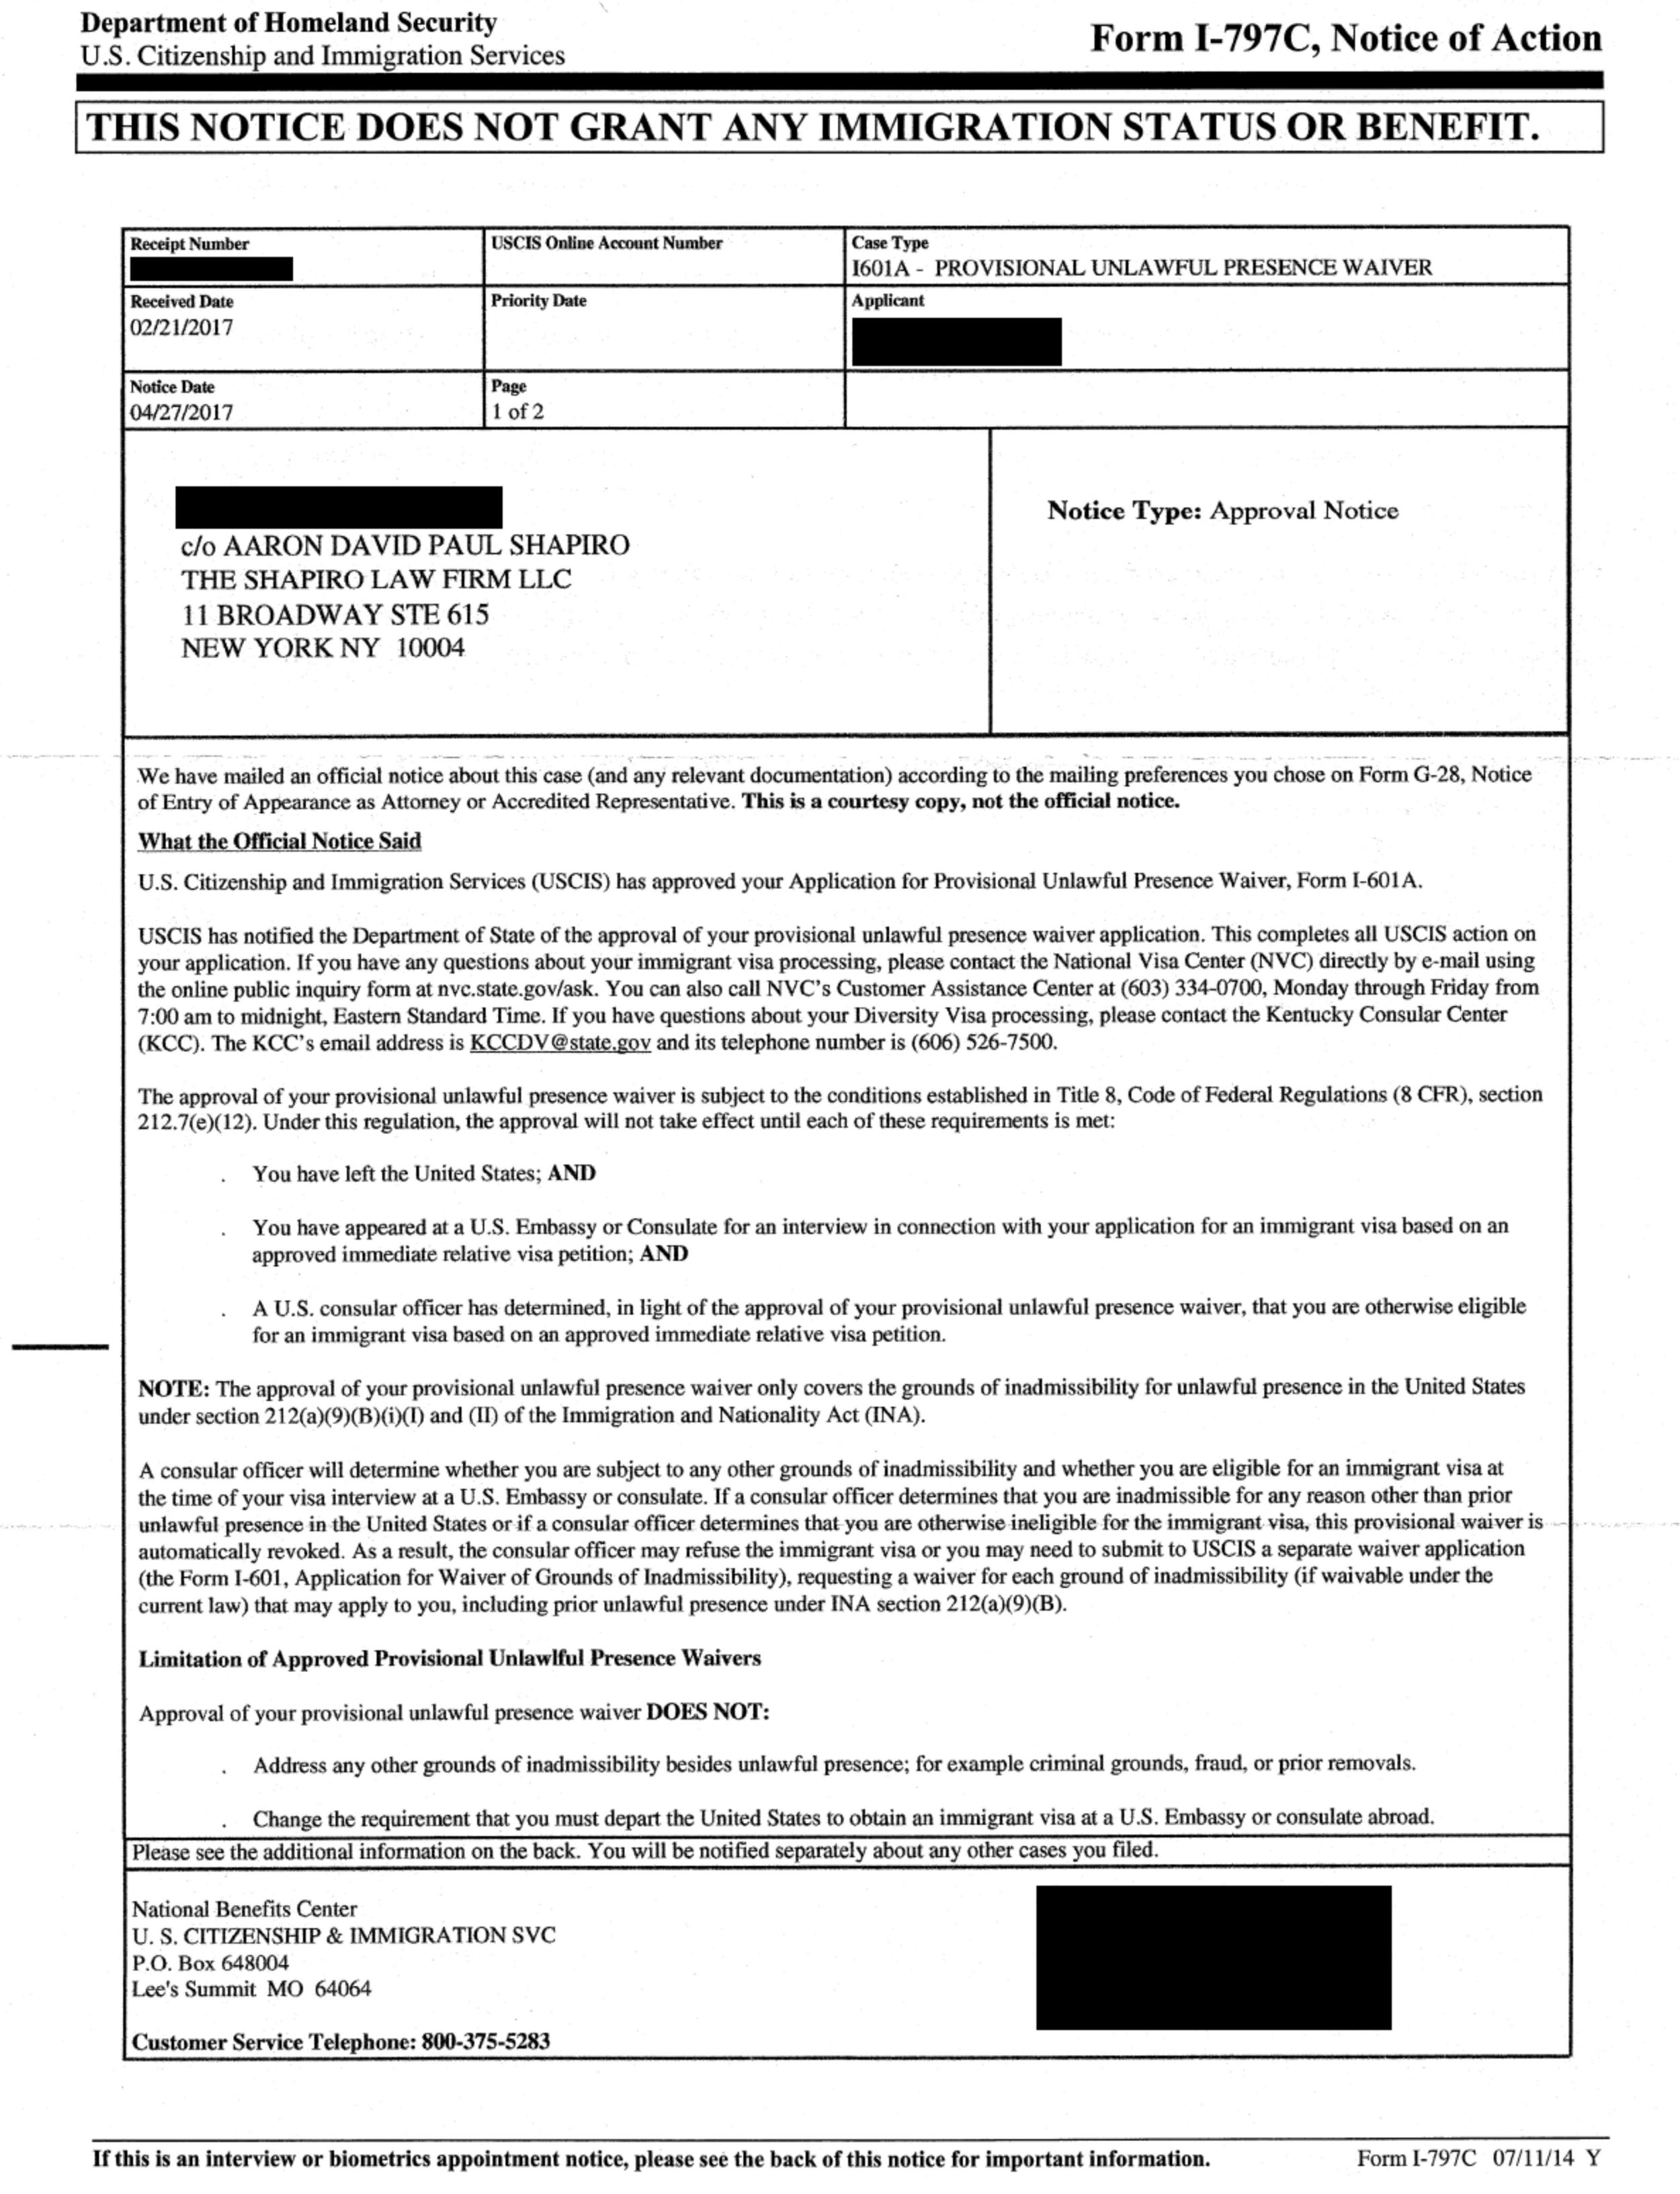 Form I-797C, I-601A Approval Notice, Page 1